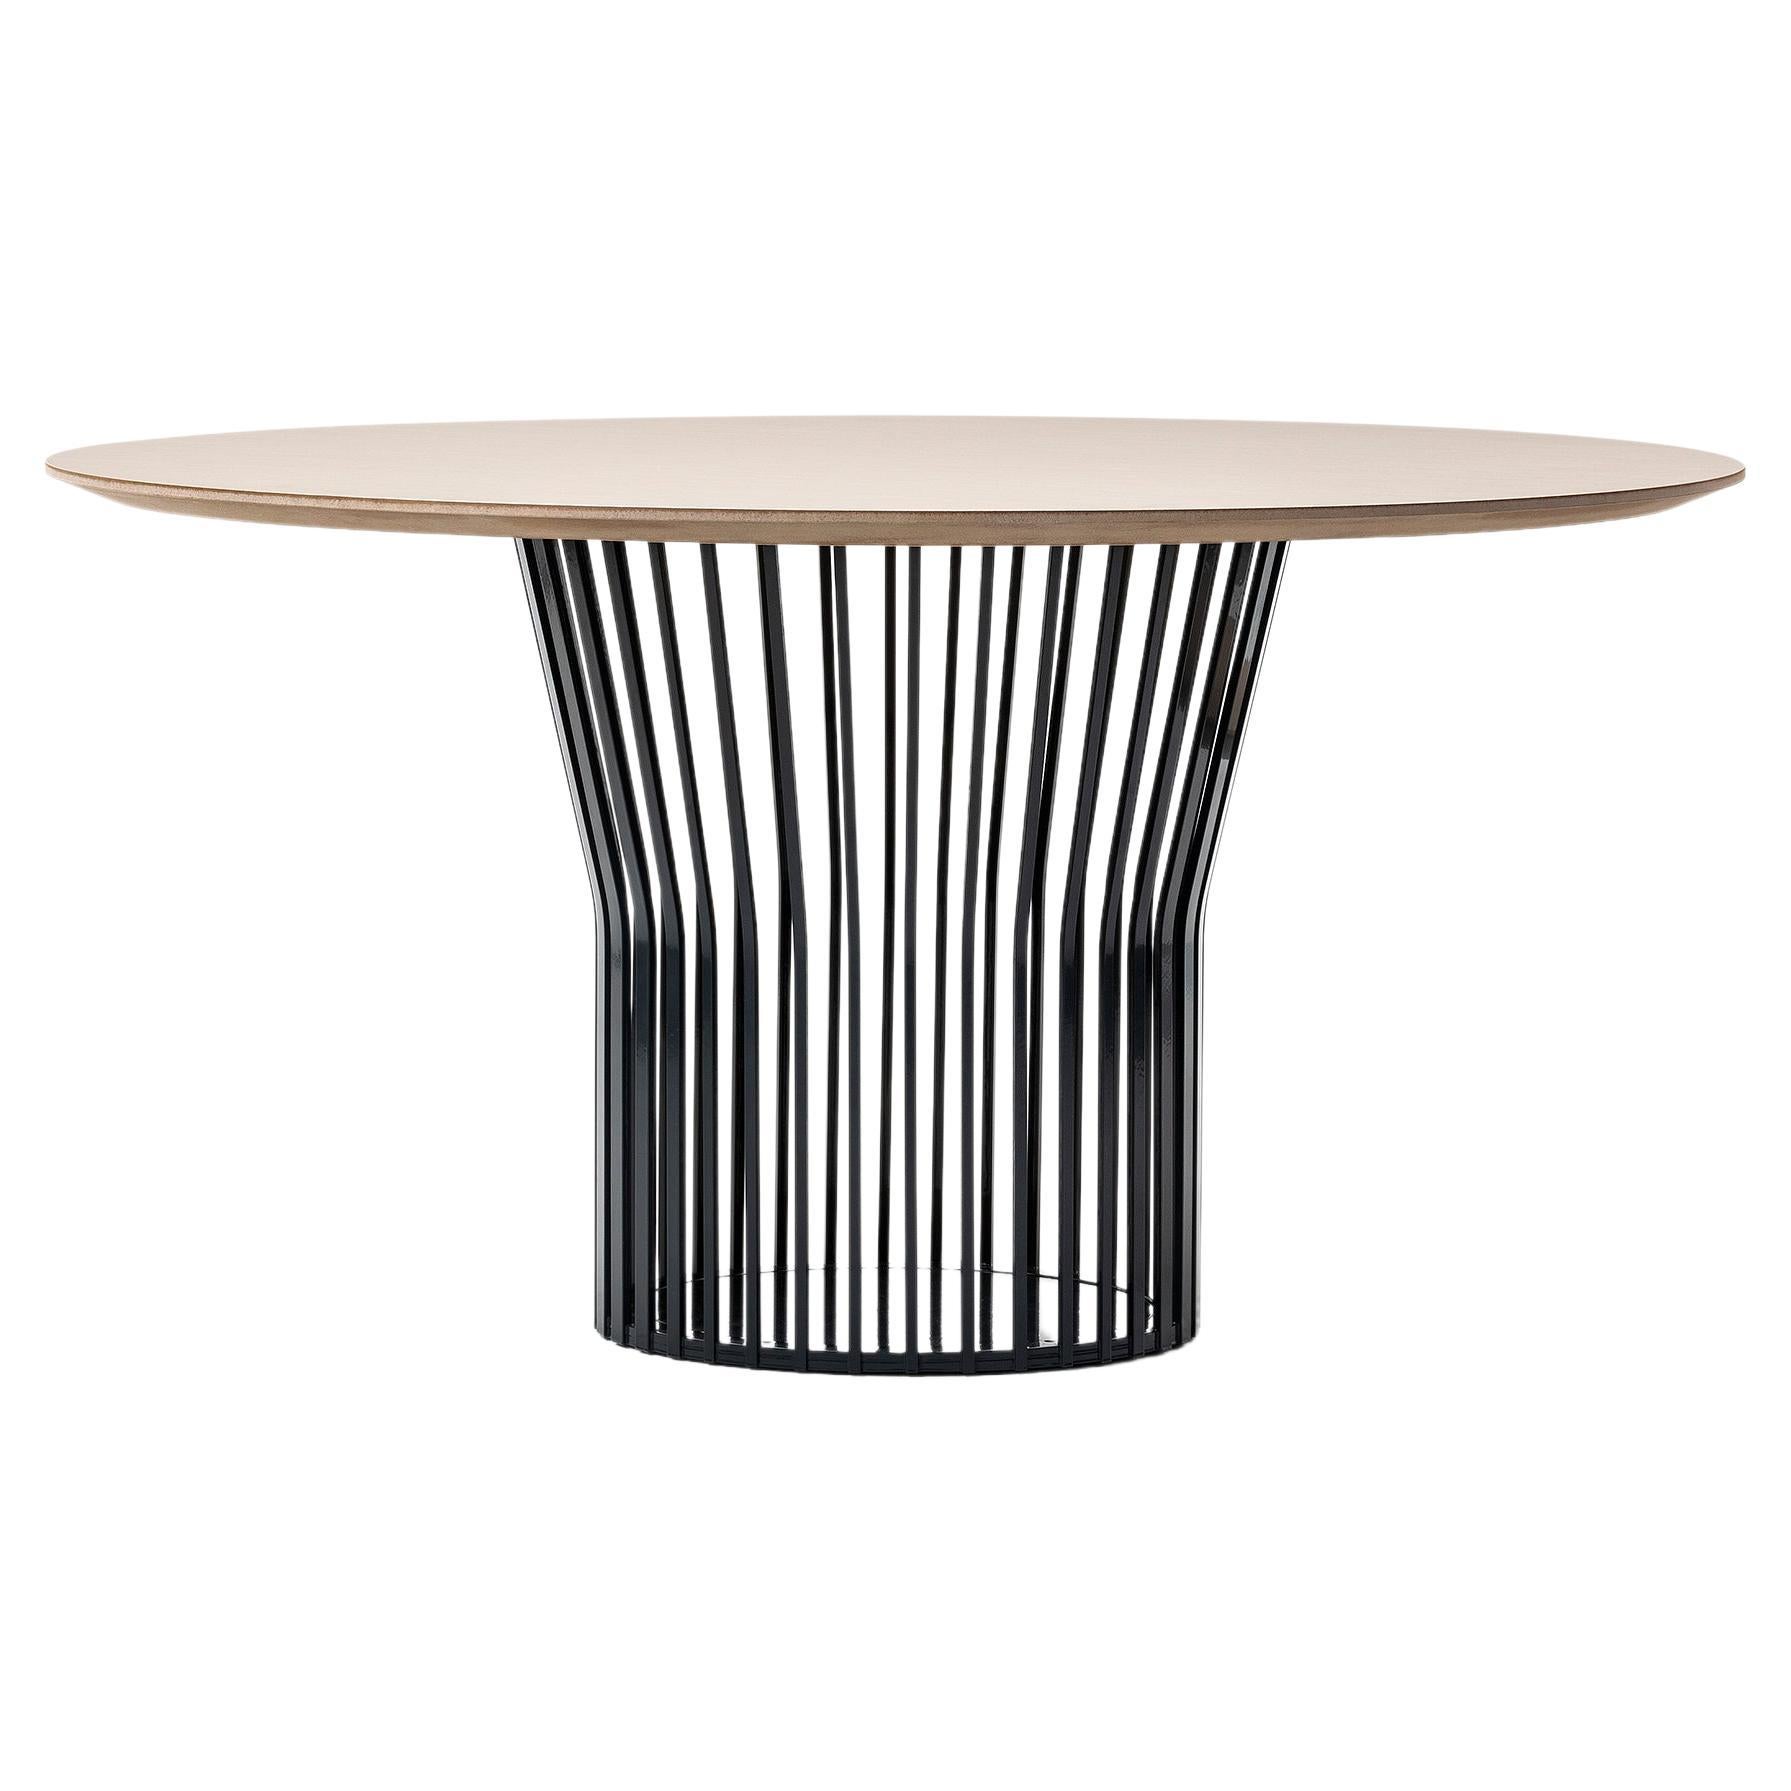 Ray Table 0142, Metal, Design, Living, Wood, Home, Table, Original, Black, Oak For Sale